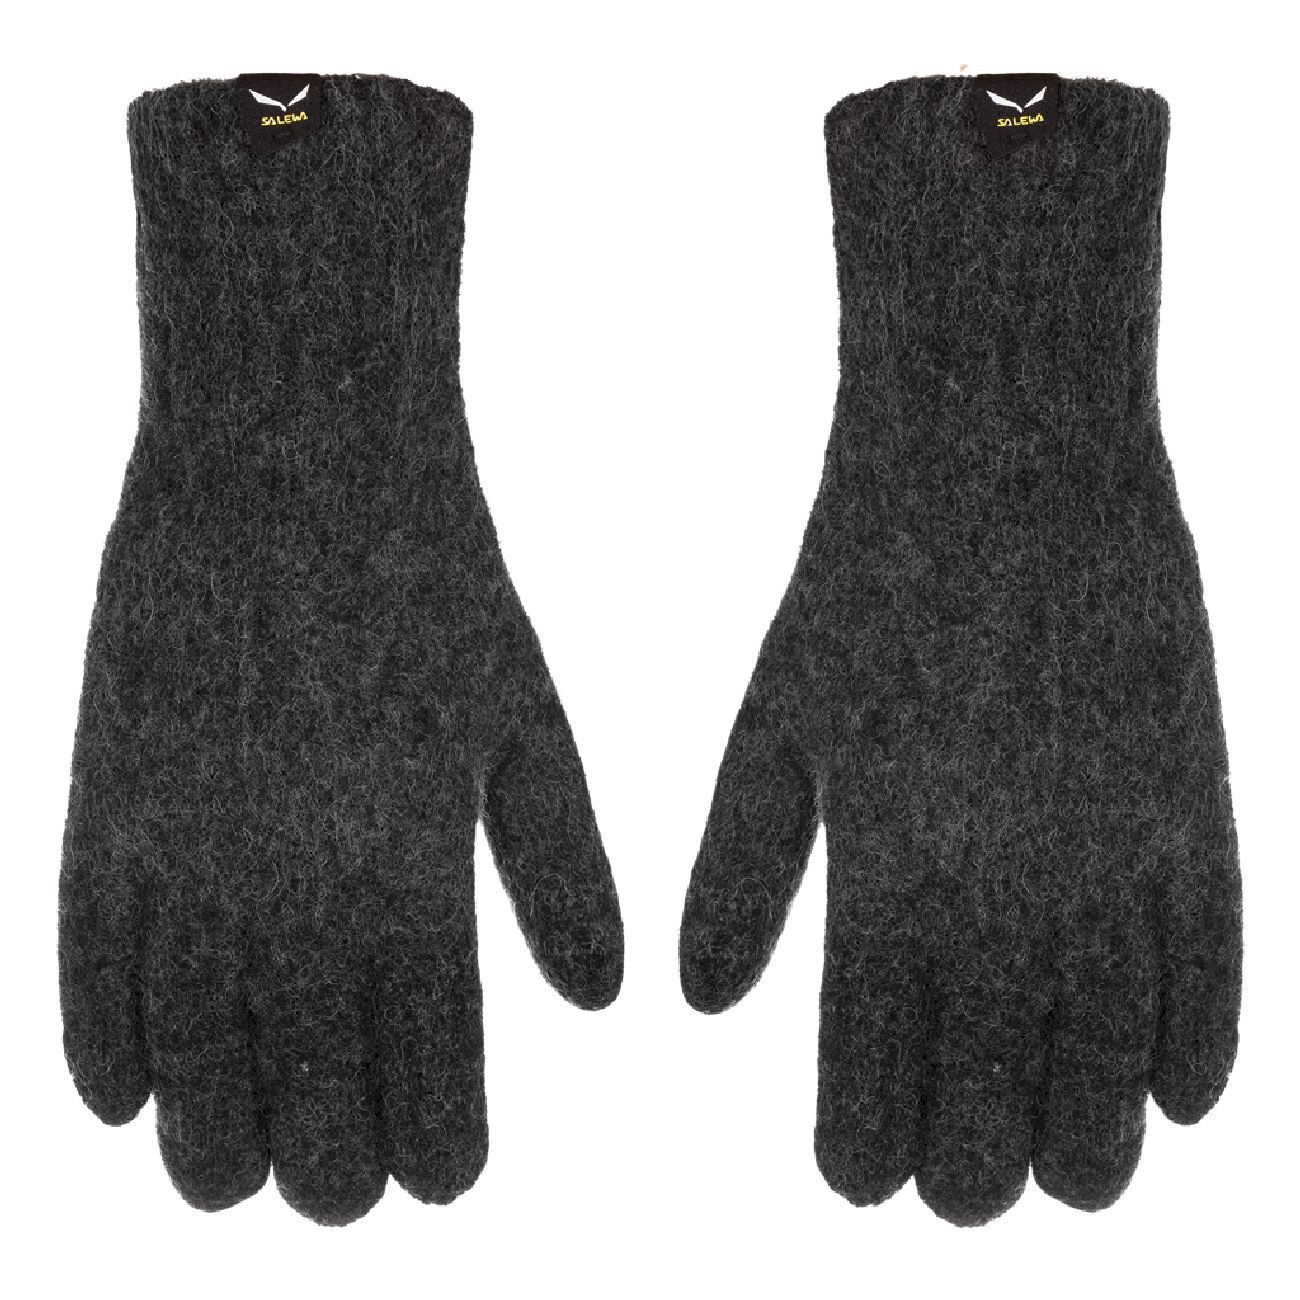 Salewa Walk Wool Gloves - Handskar